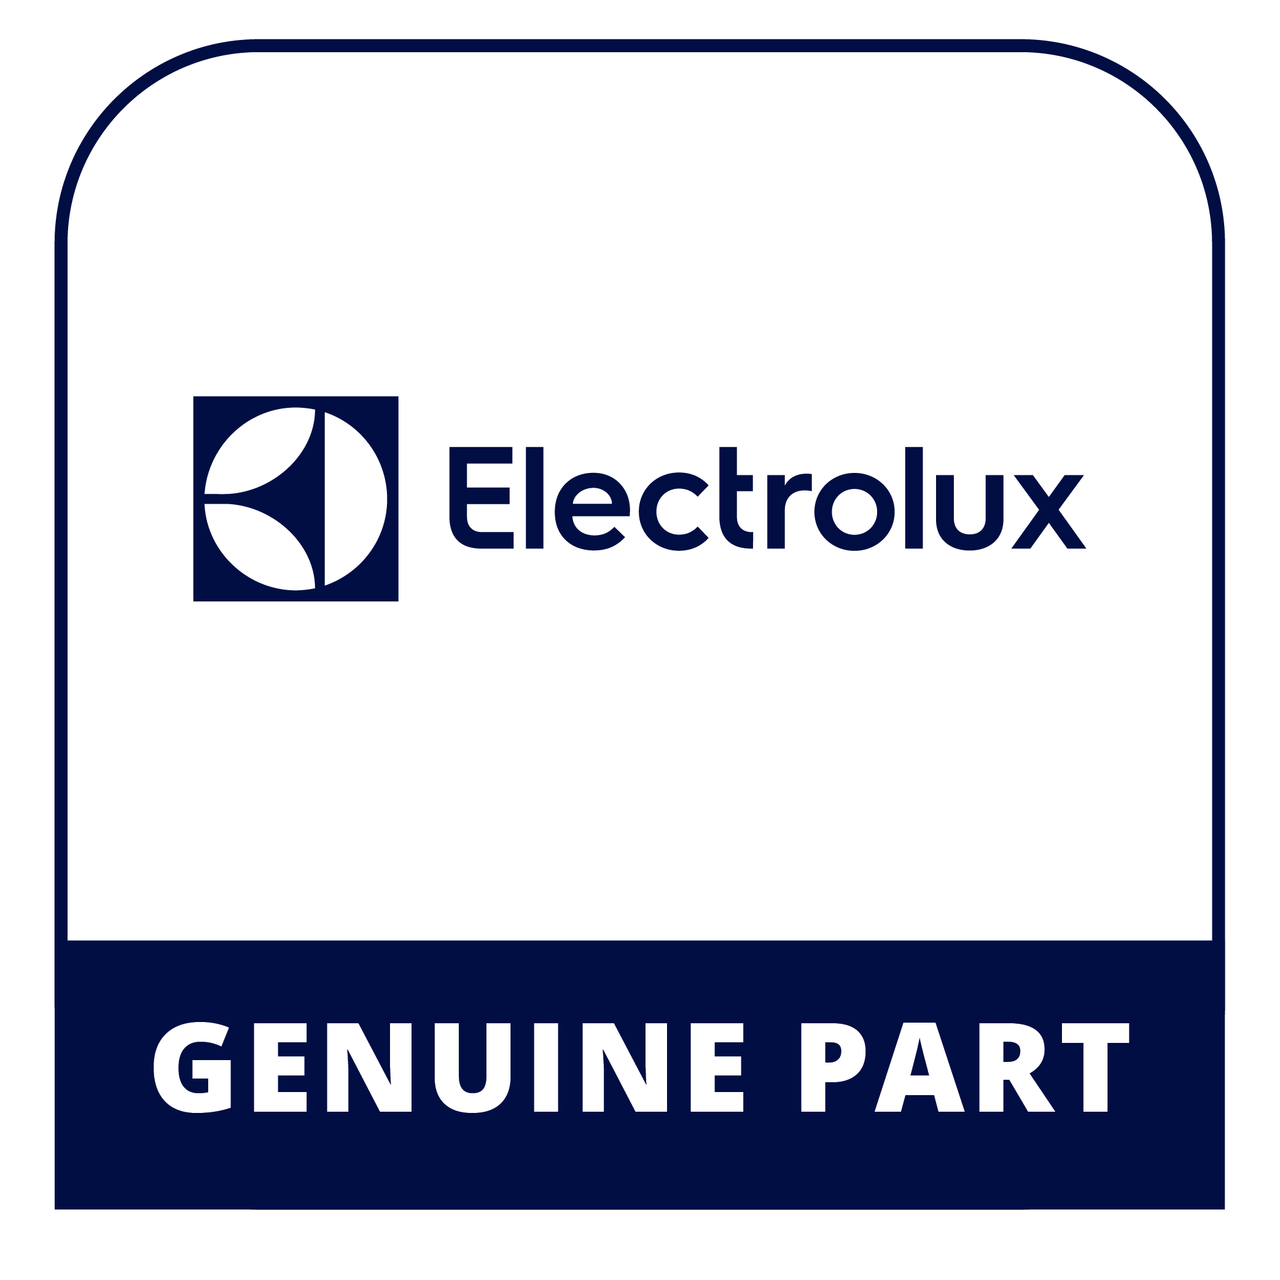 Frigidaire - Electrolux 316443912 Board - Genuine Electrolux Part